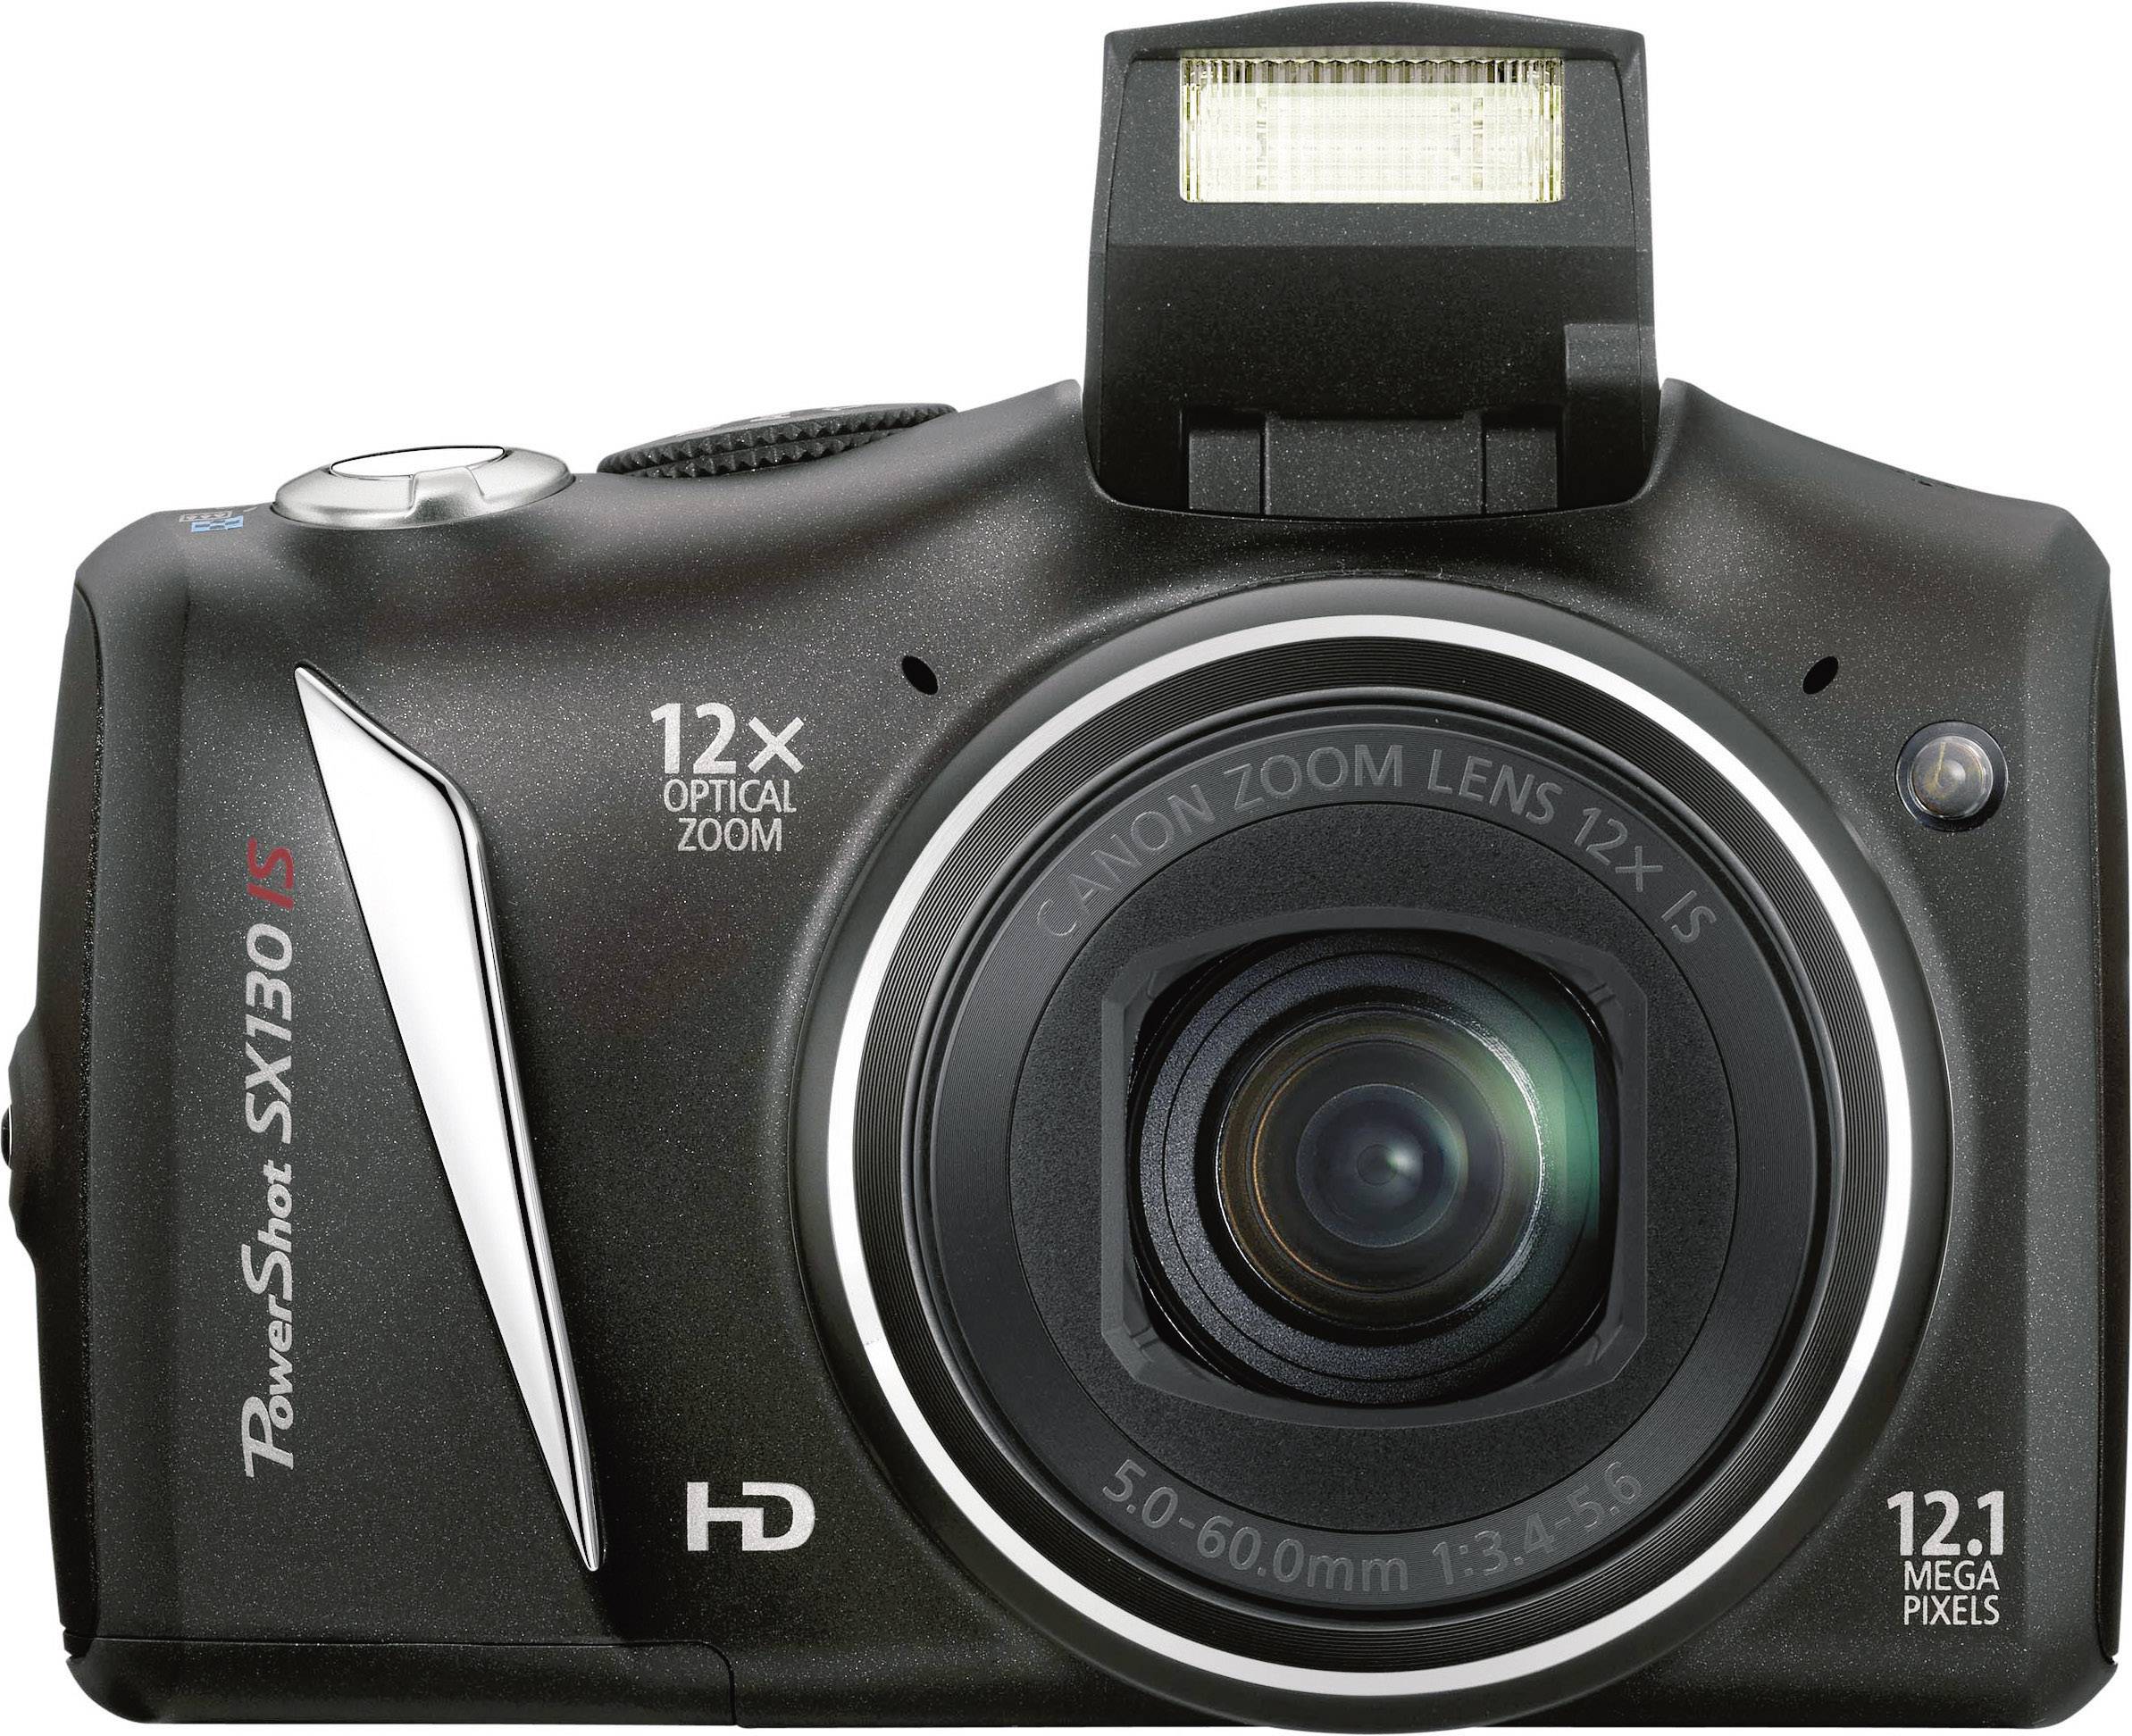 Bedrog benzine forum Canon PowerShot SX130 IS | Conrad.com